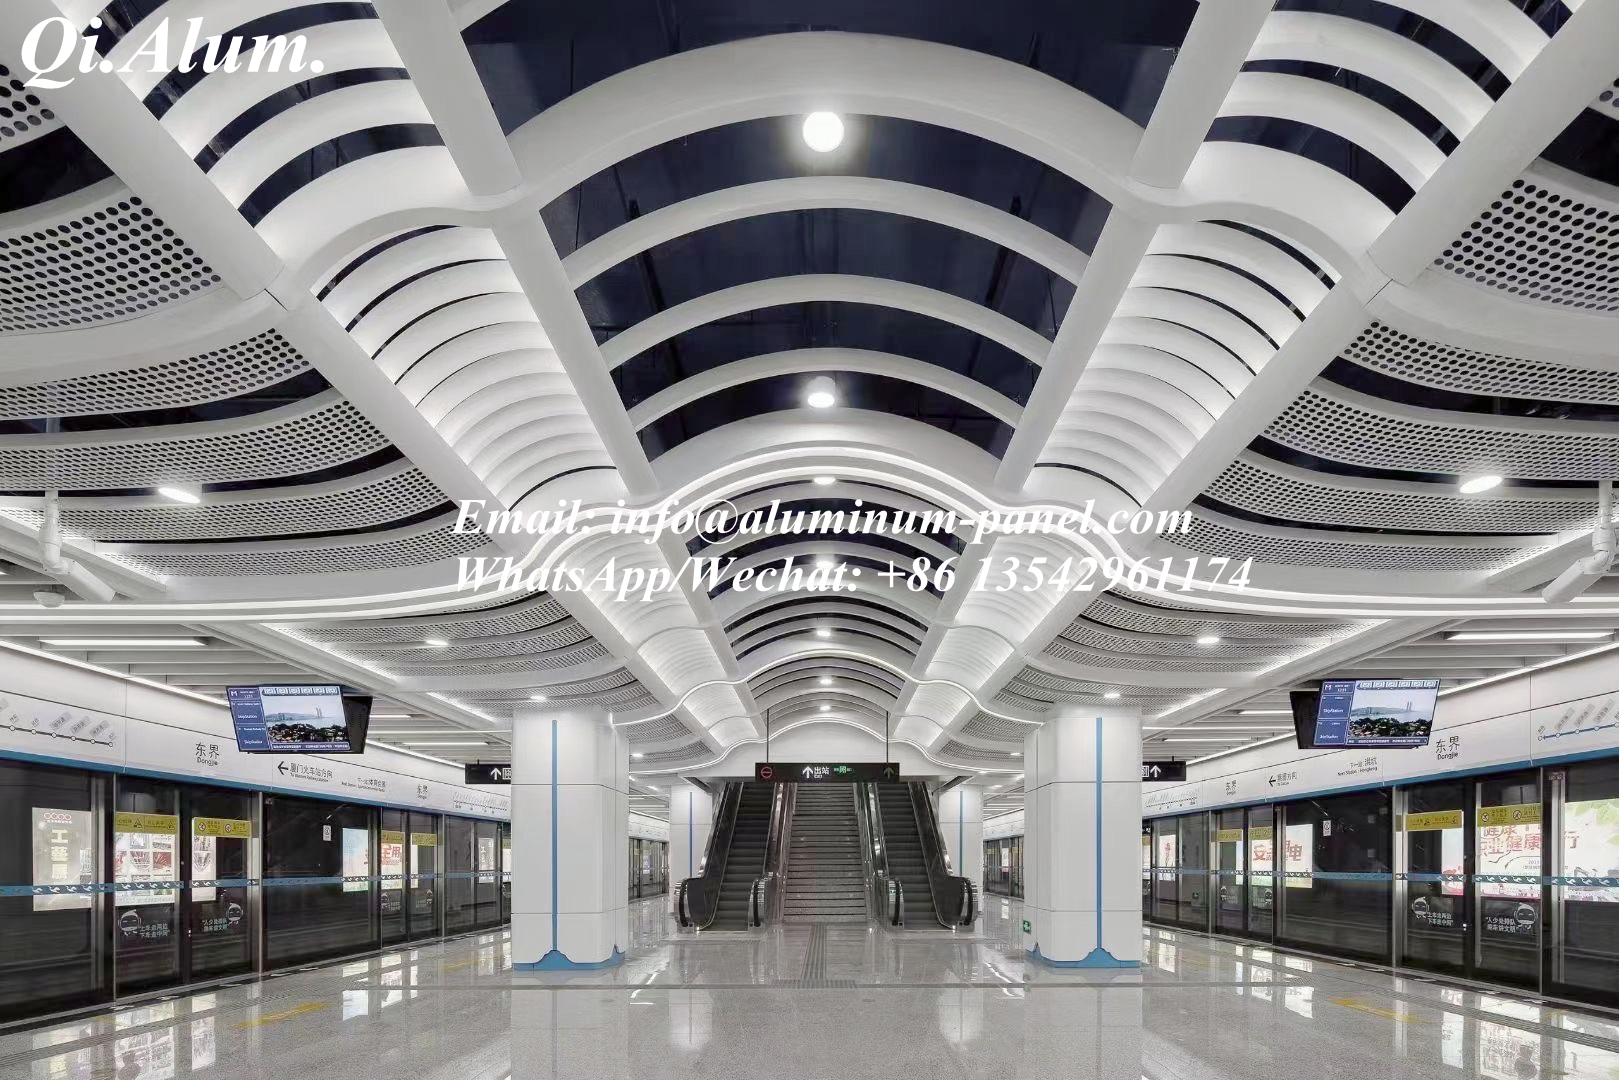 Xiamen subway station aluminum perforated panel and aluminum tube ceiling decoration